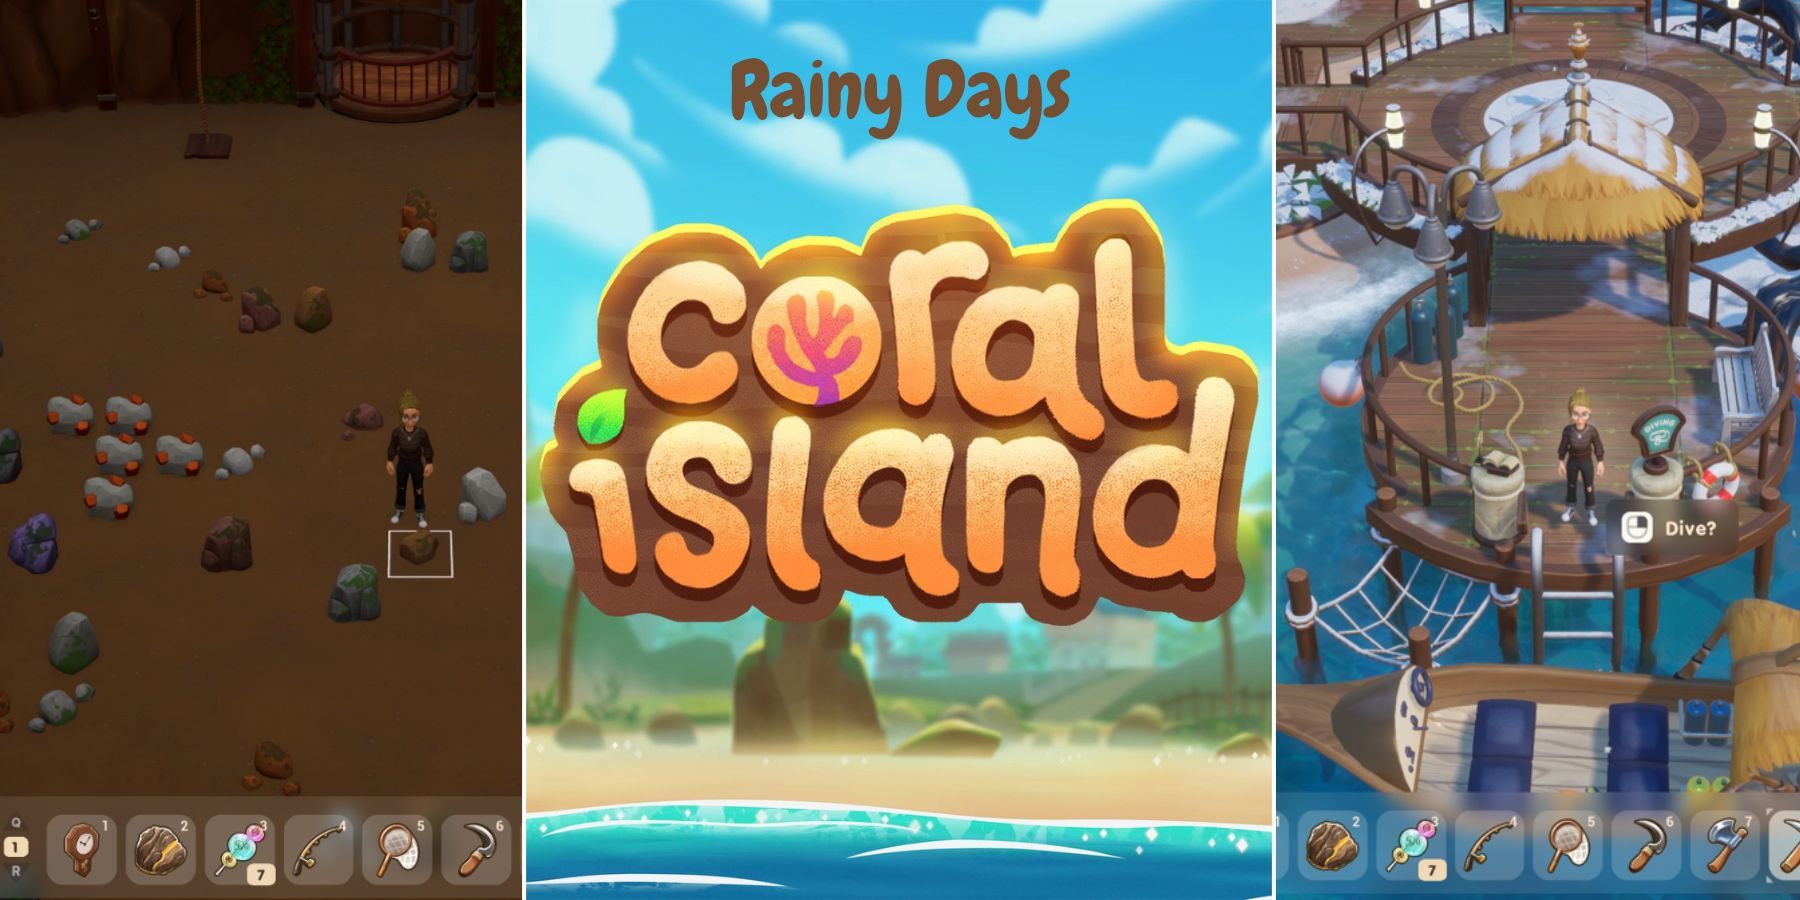 Coral Island rainy days